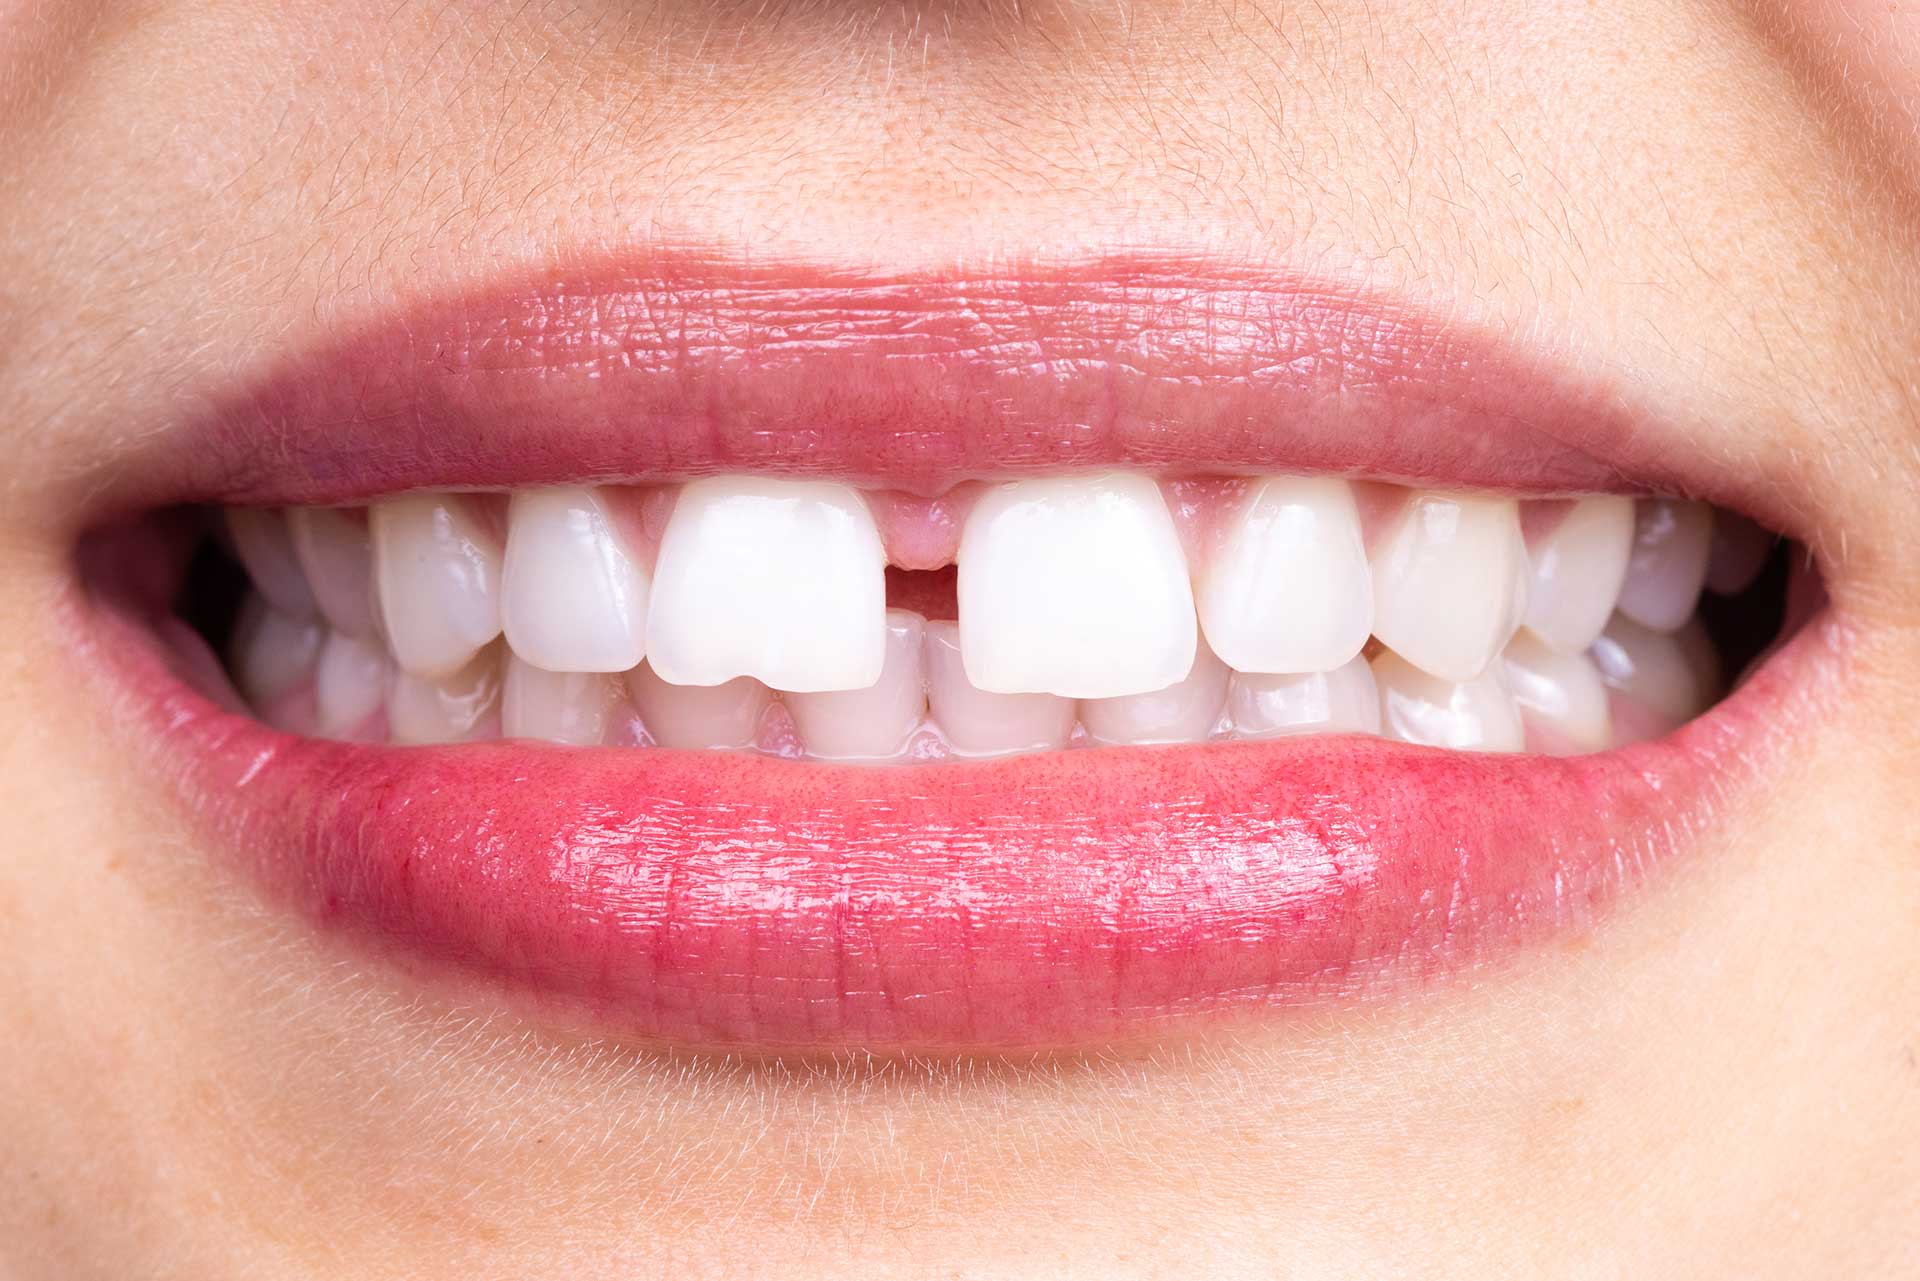 Can Gaps Between Teeth (Diastemata) Be Treated?